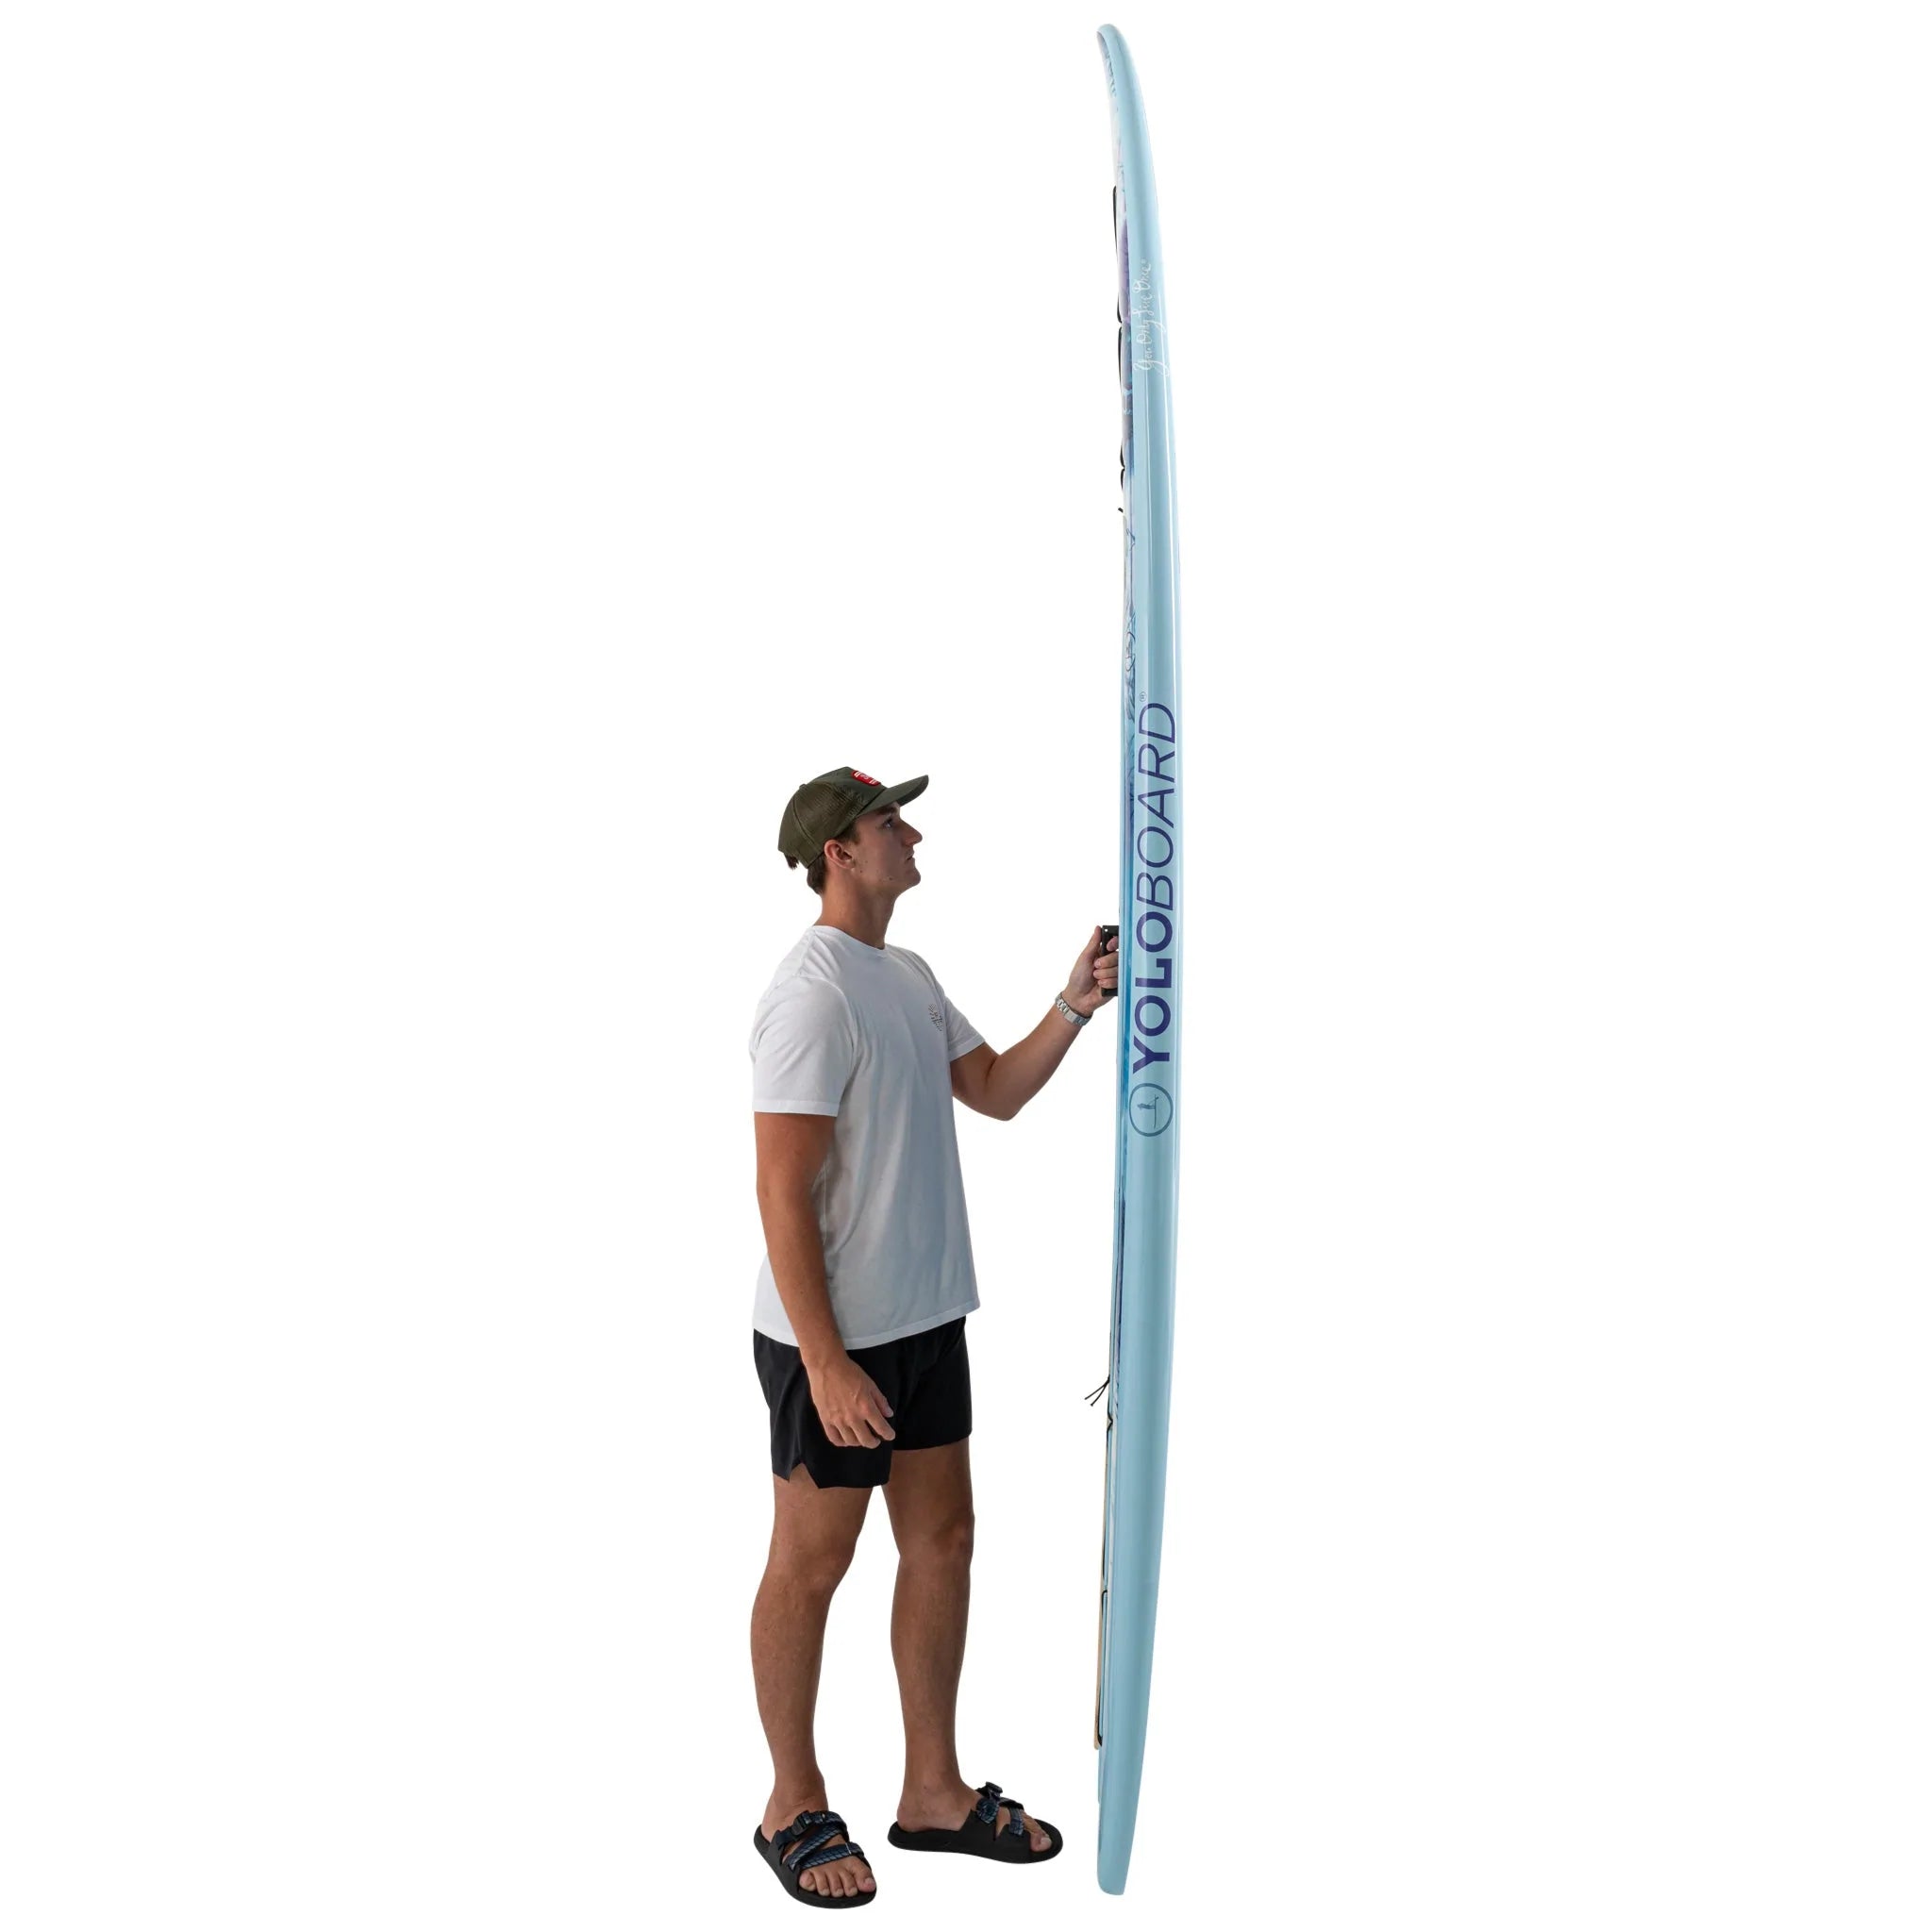 Paddle Board 10'6 Original - Underwater Honu